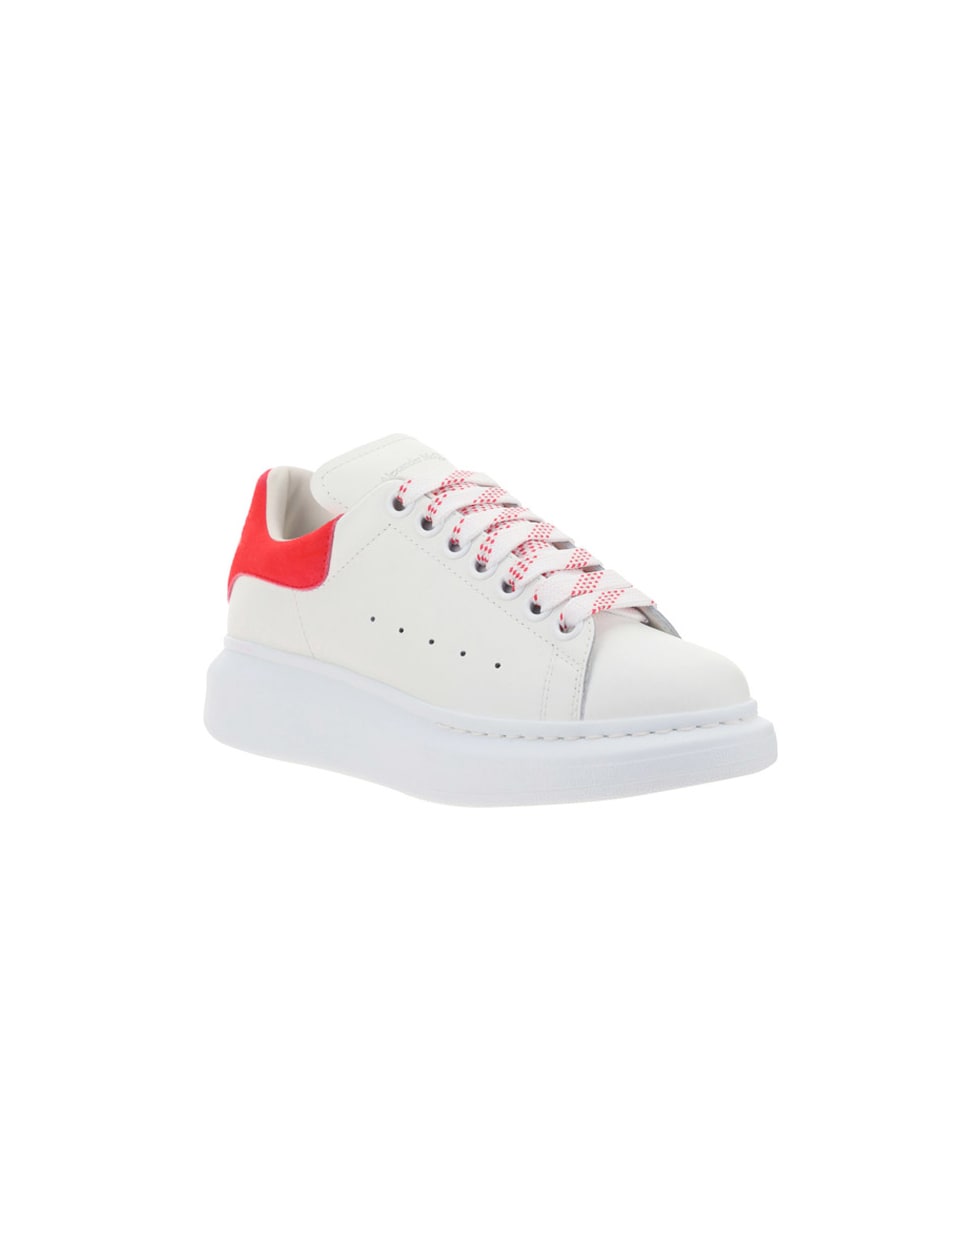 Alexander McQueen Sneakers - White/peony pink